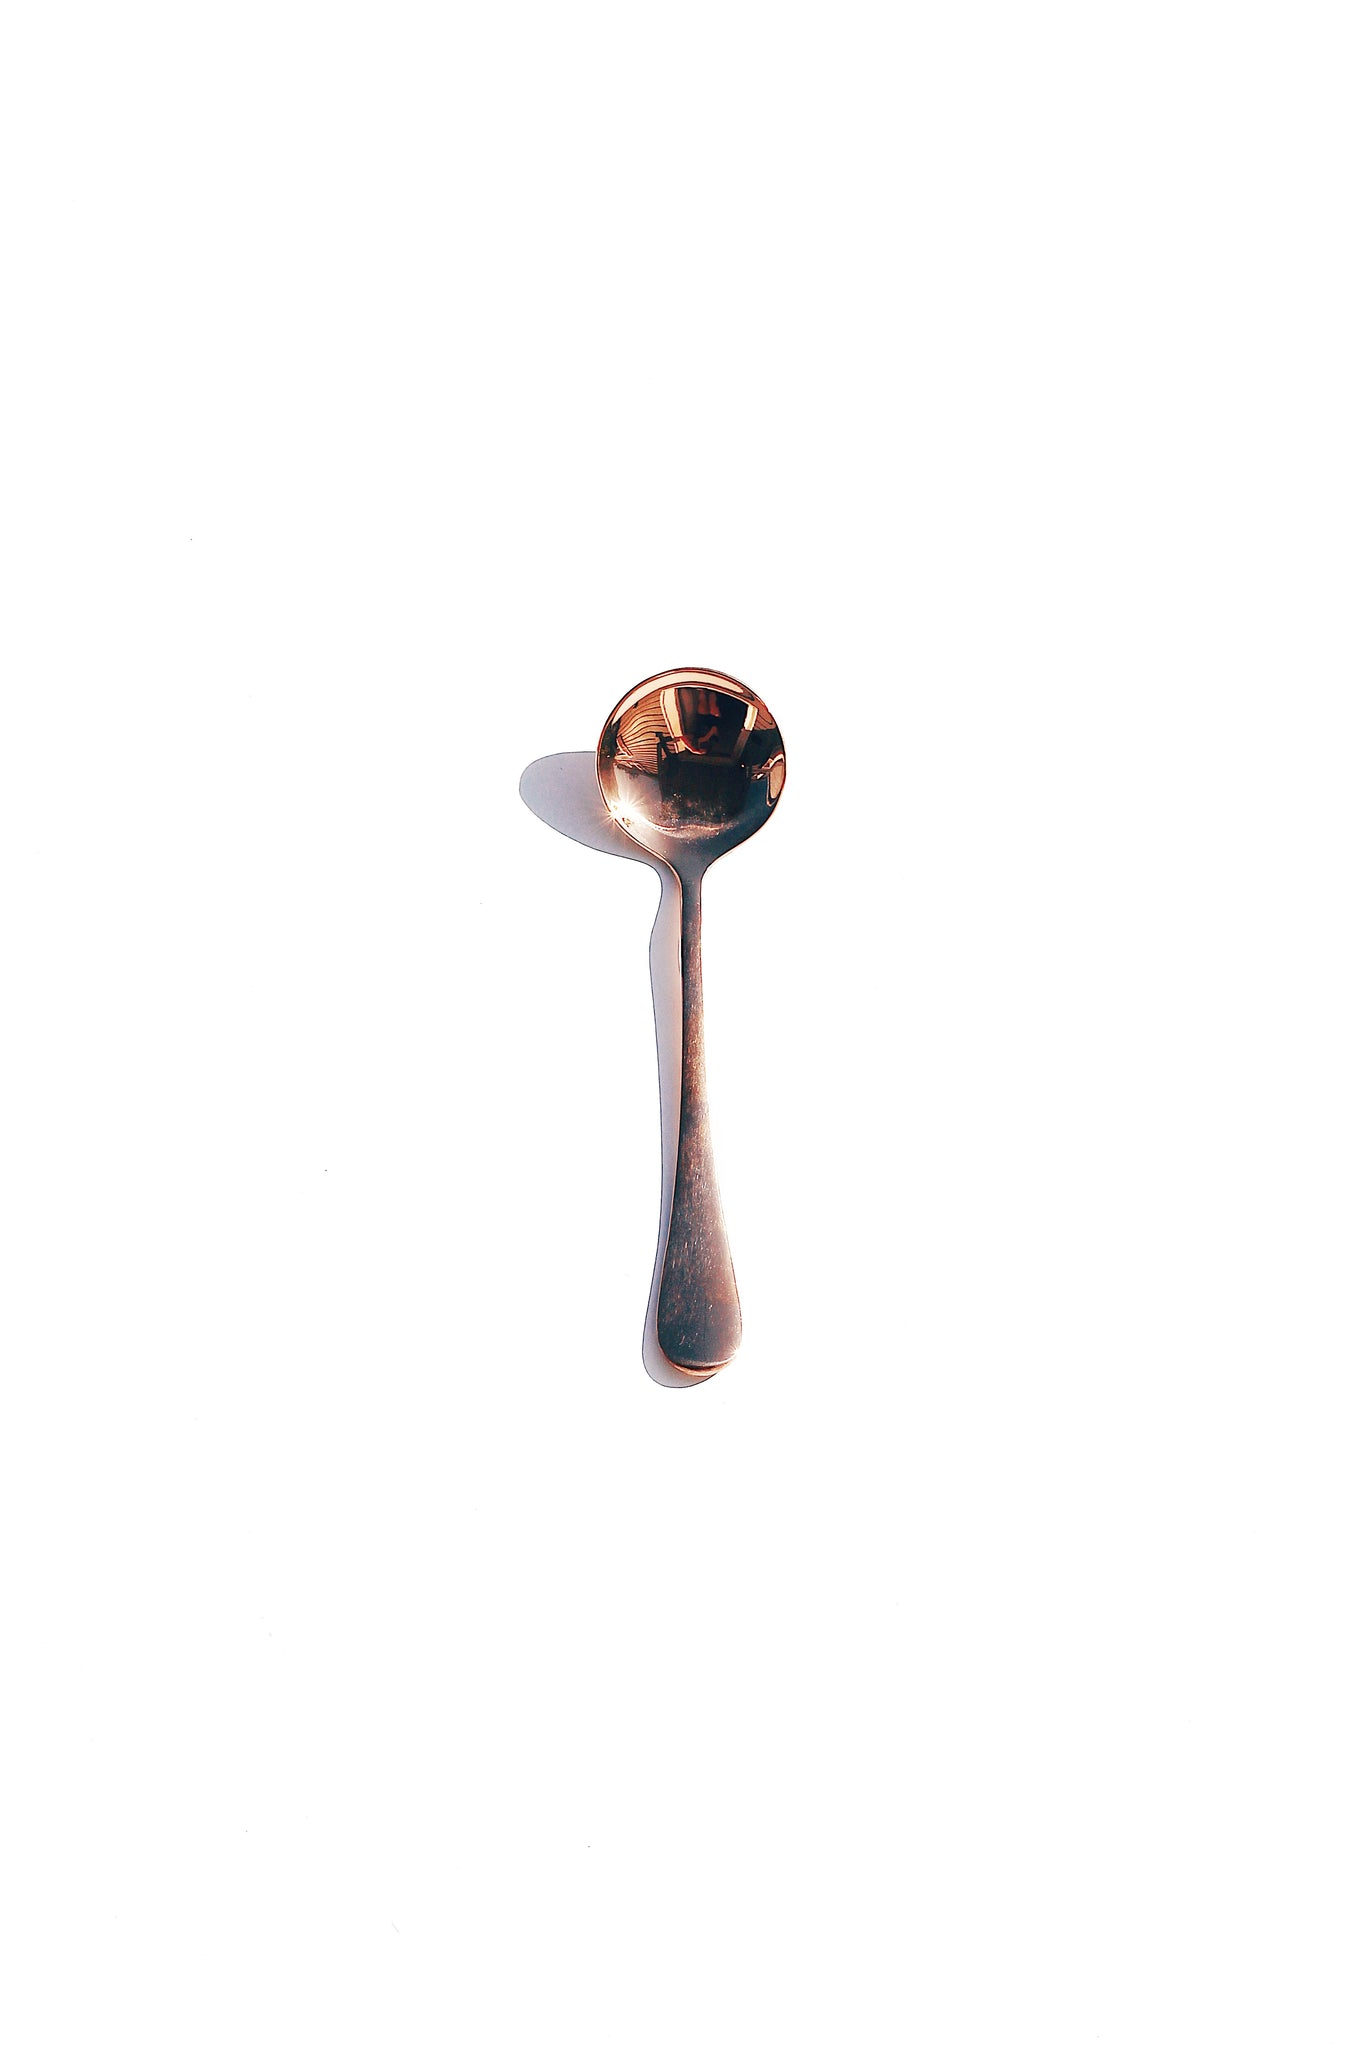 Revolution Cupping Spoon